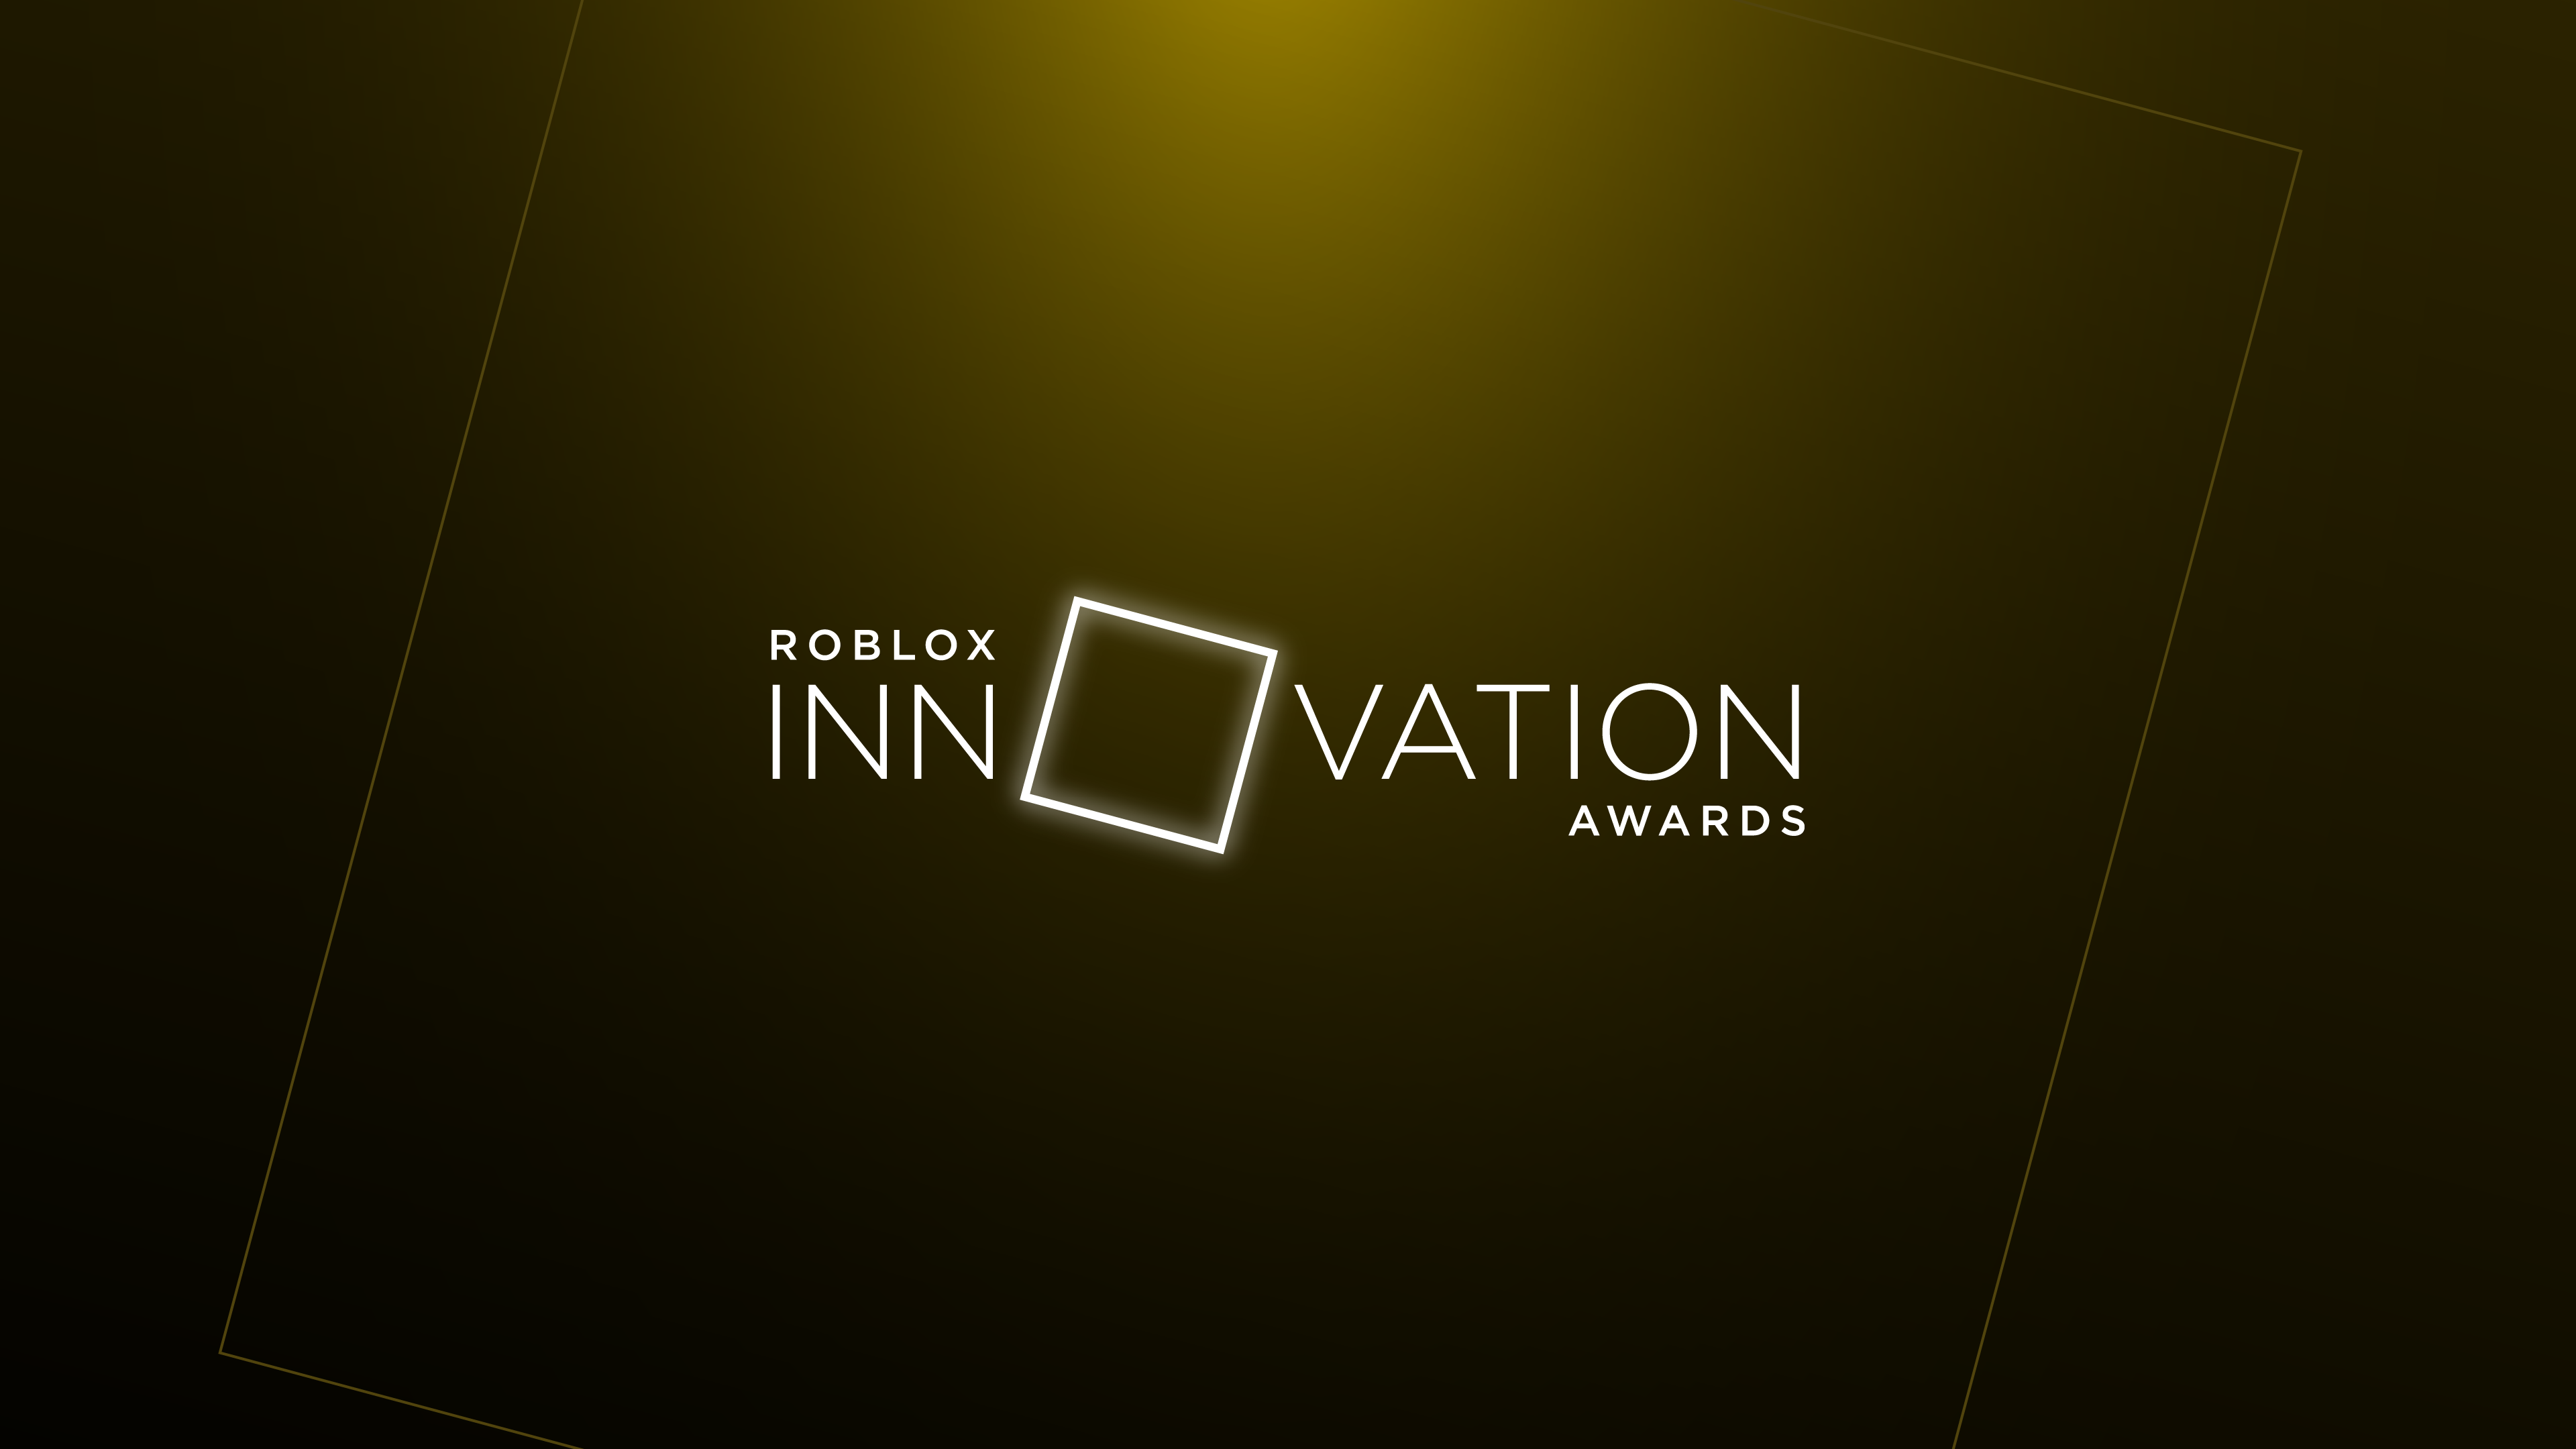 Roblox Innovation Awards 2022: Complete Winners List - Roblox Blog